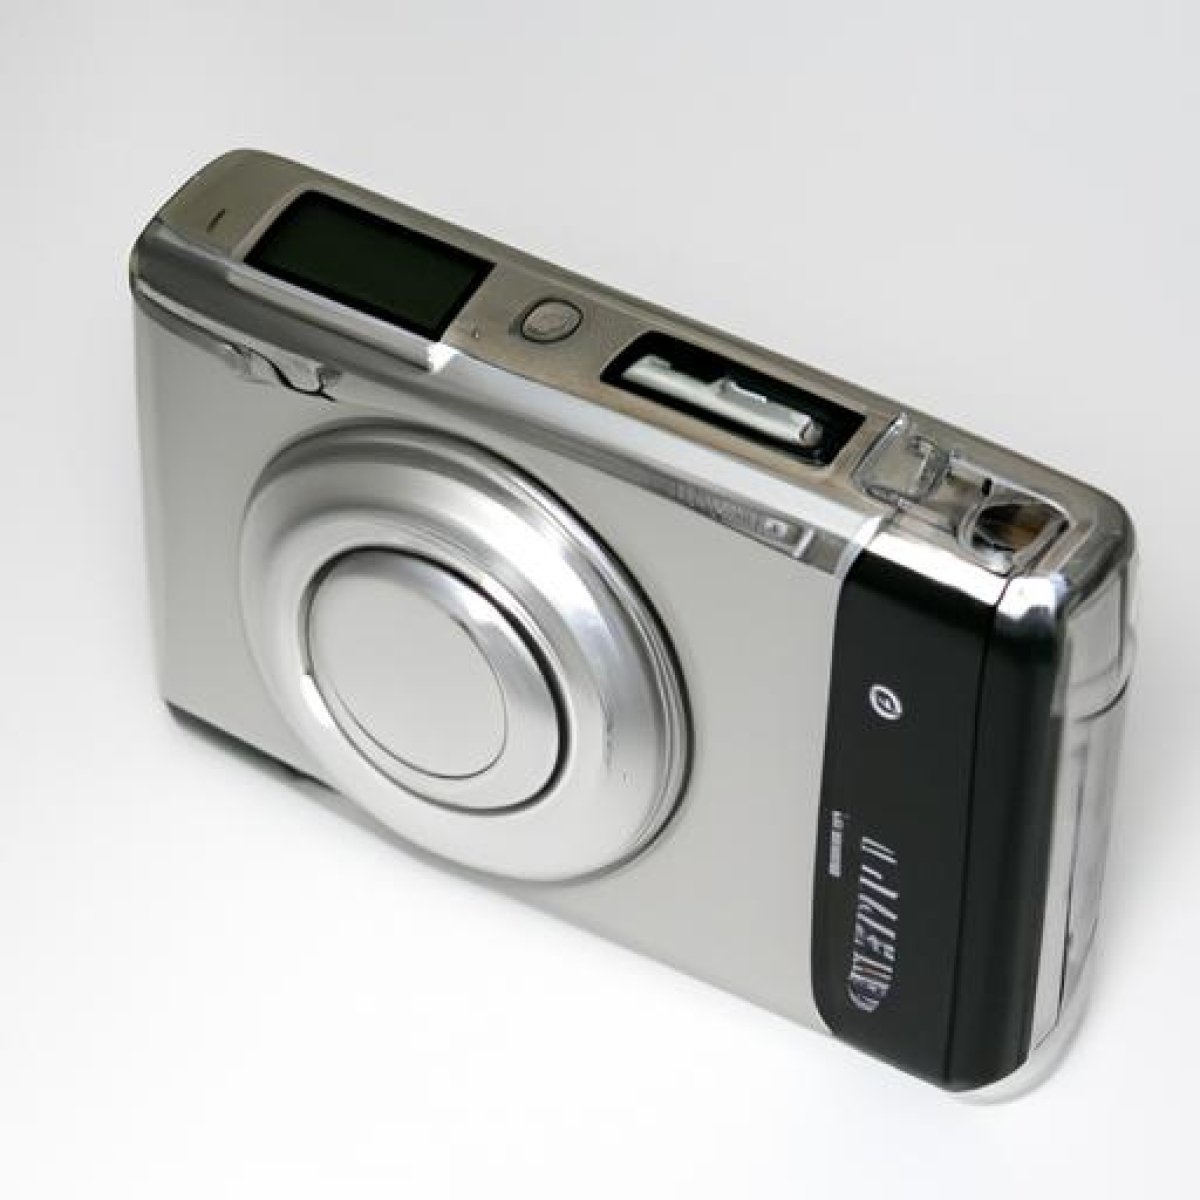 Canon ixus 60 digital camera